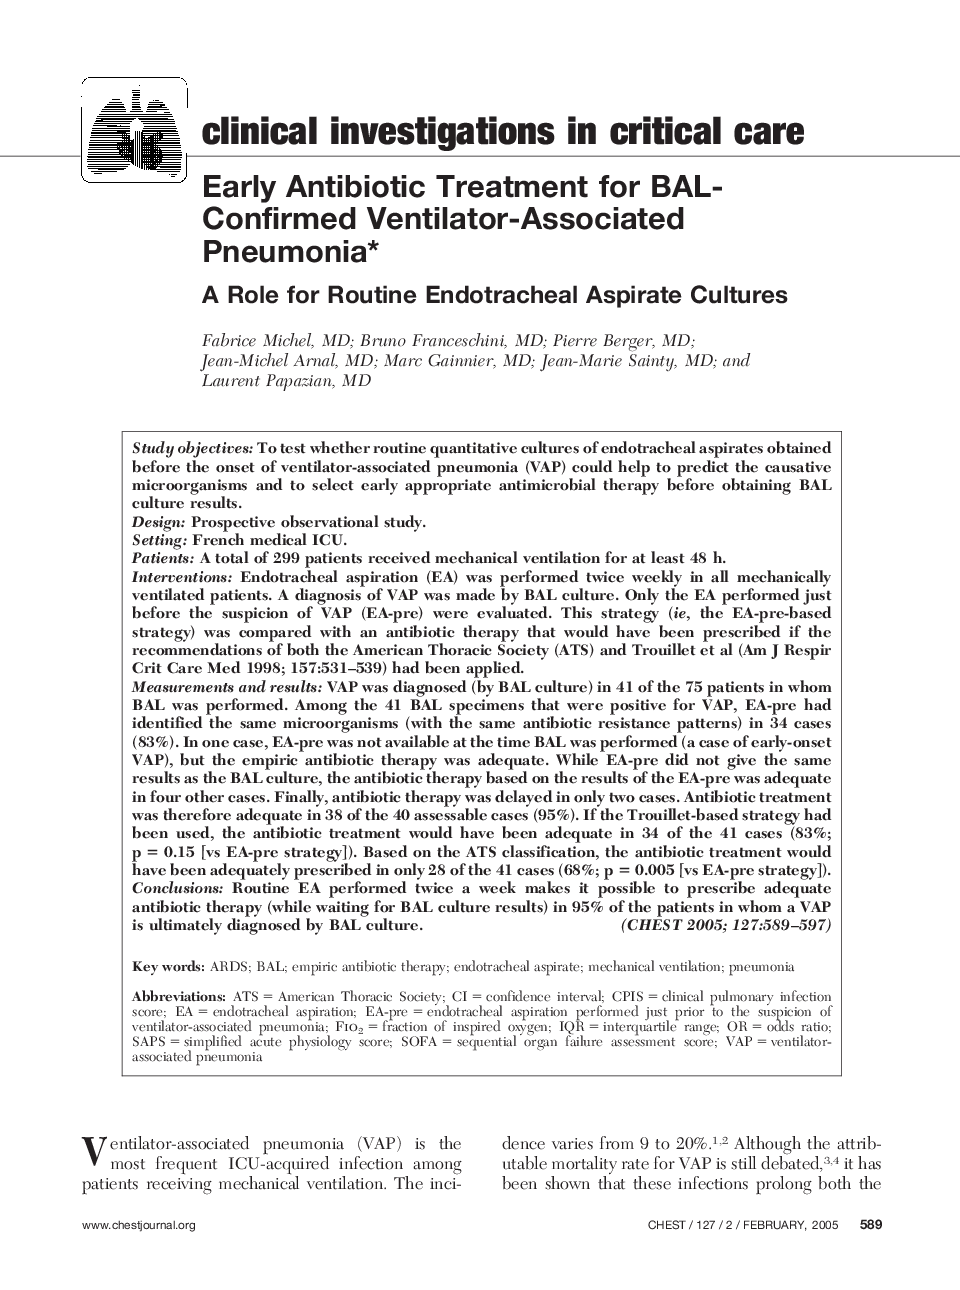 Early Antibiotic Treatment for BAL-Confirmed Ventilator-Associated Pneumonia